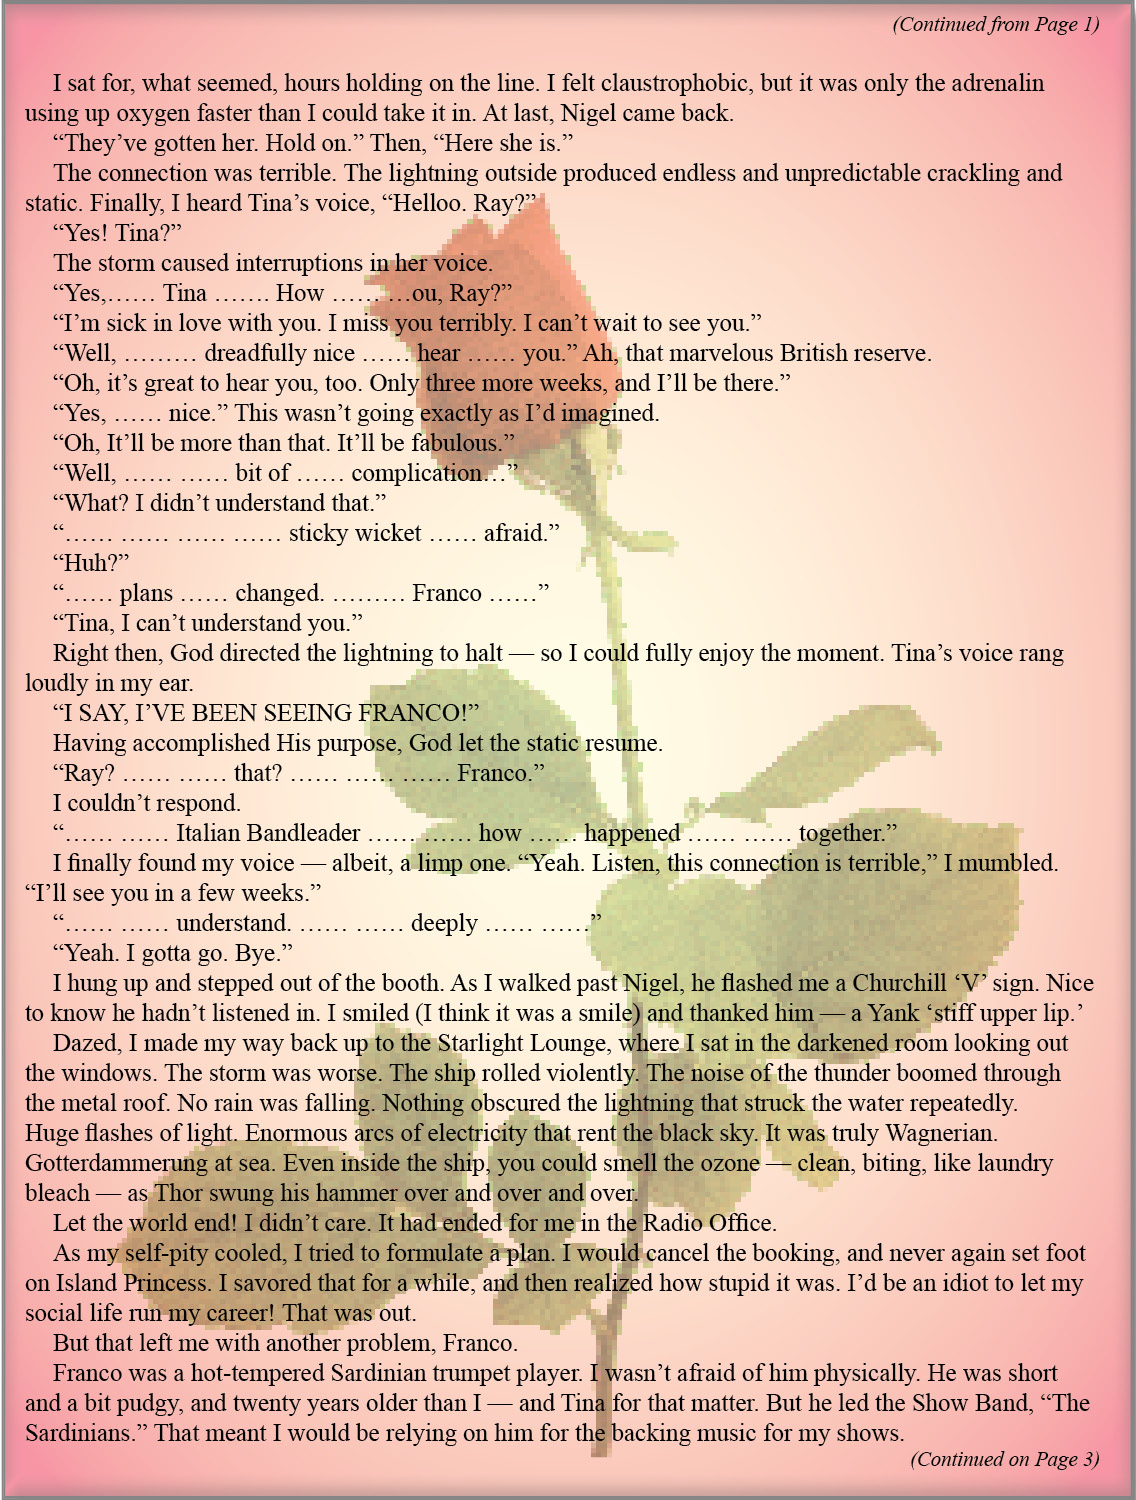 Love, Tina Page 2